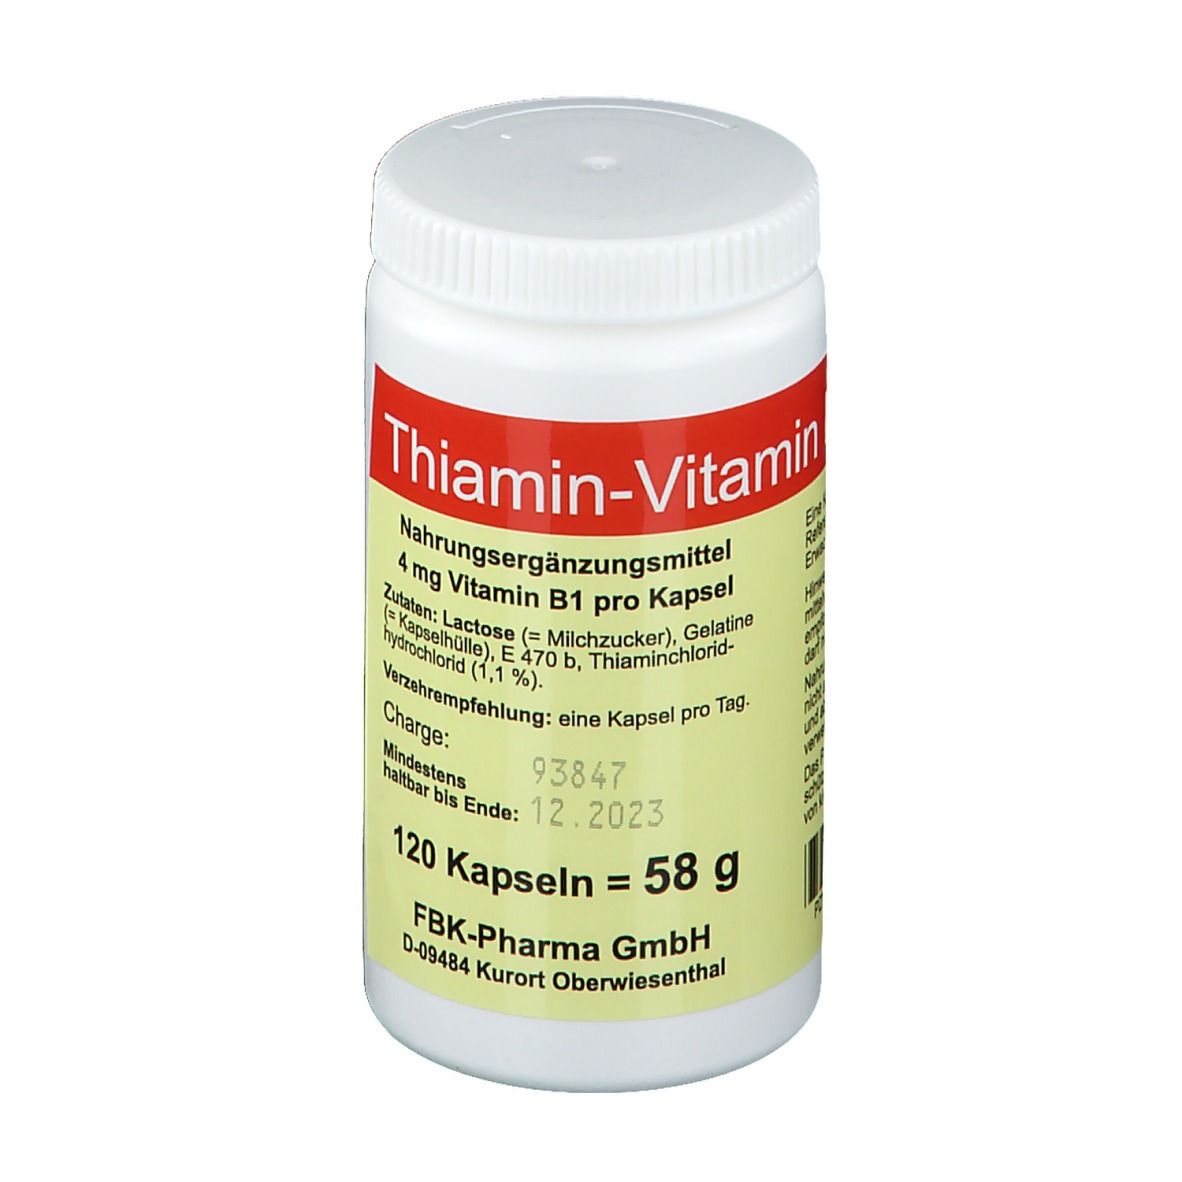 Thiamin-Vitamin B1